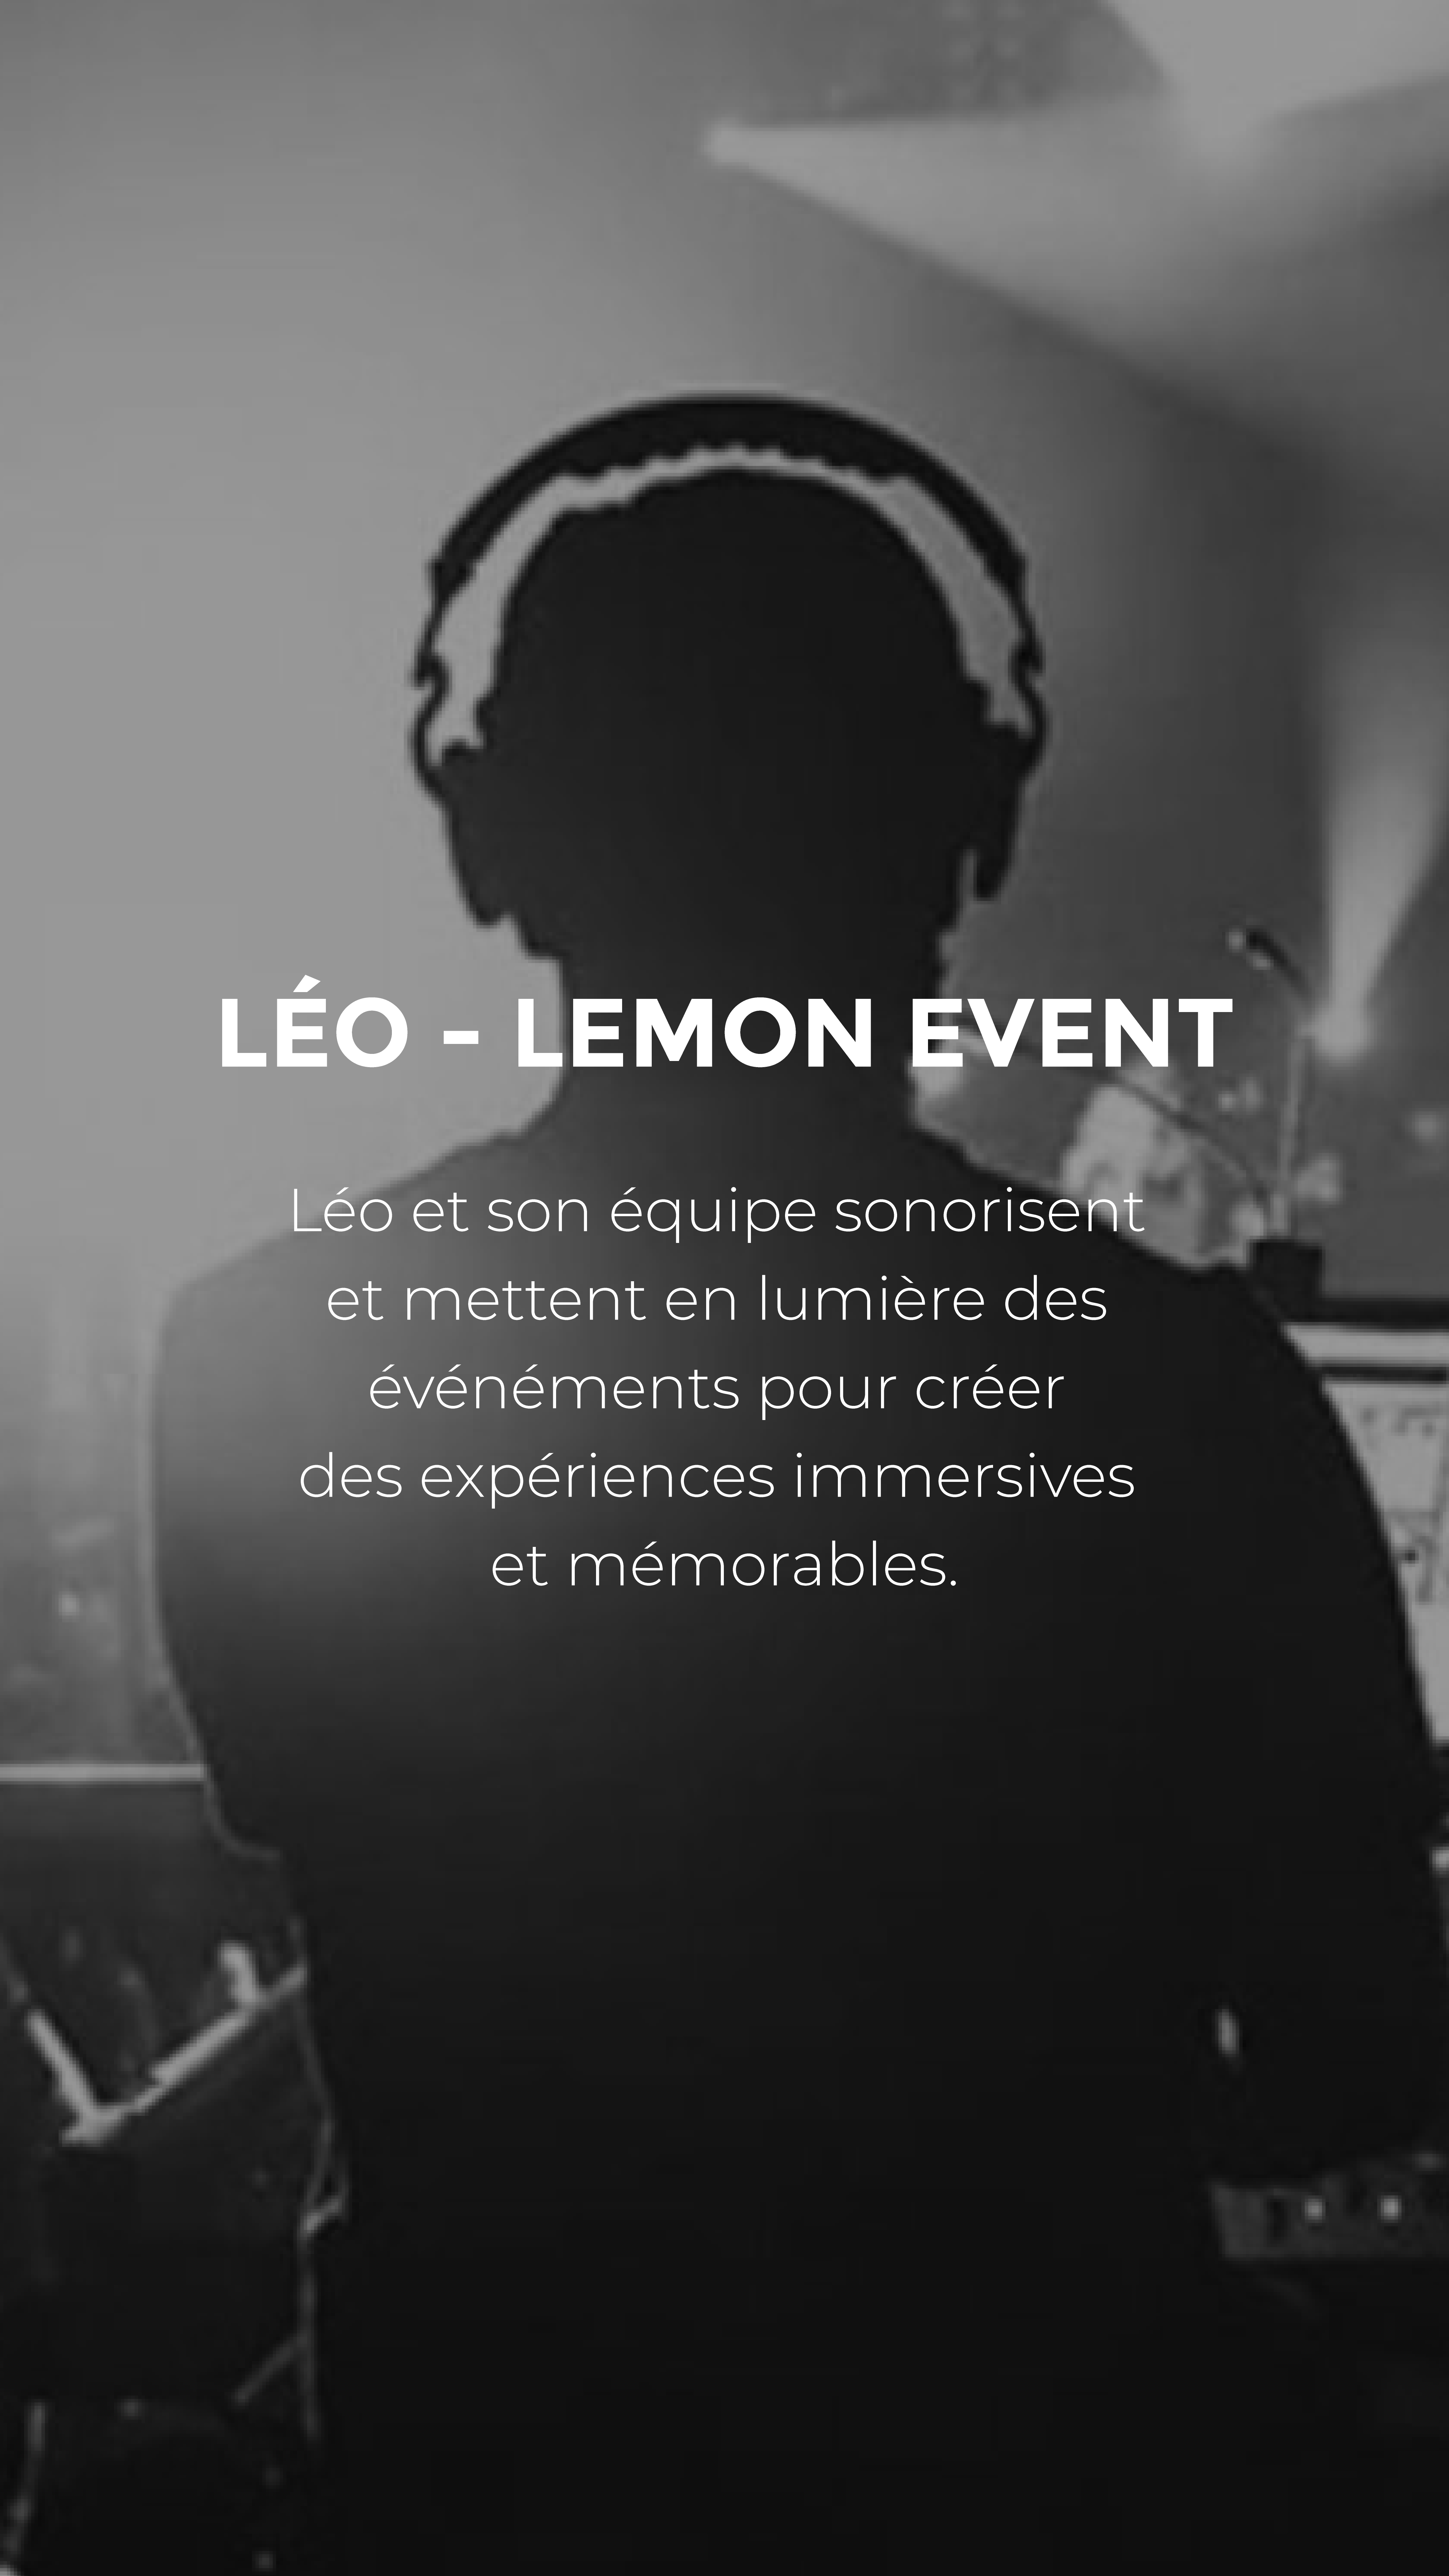 Lemon event